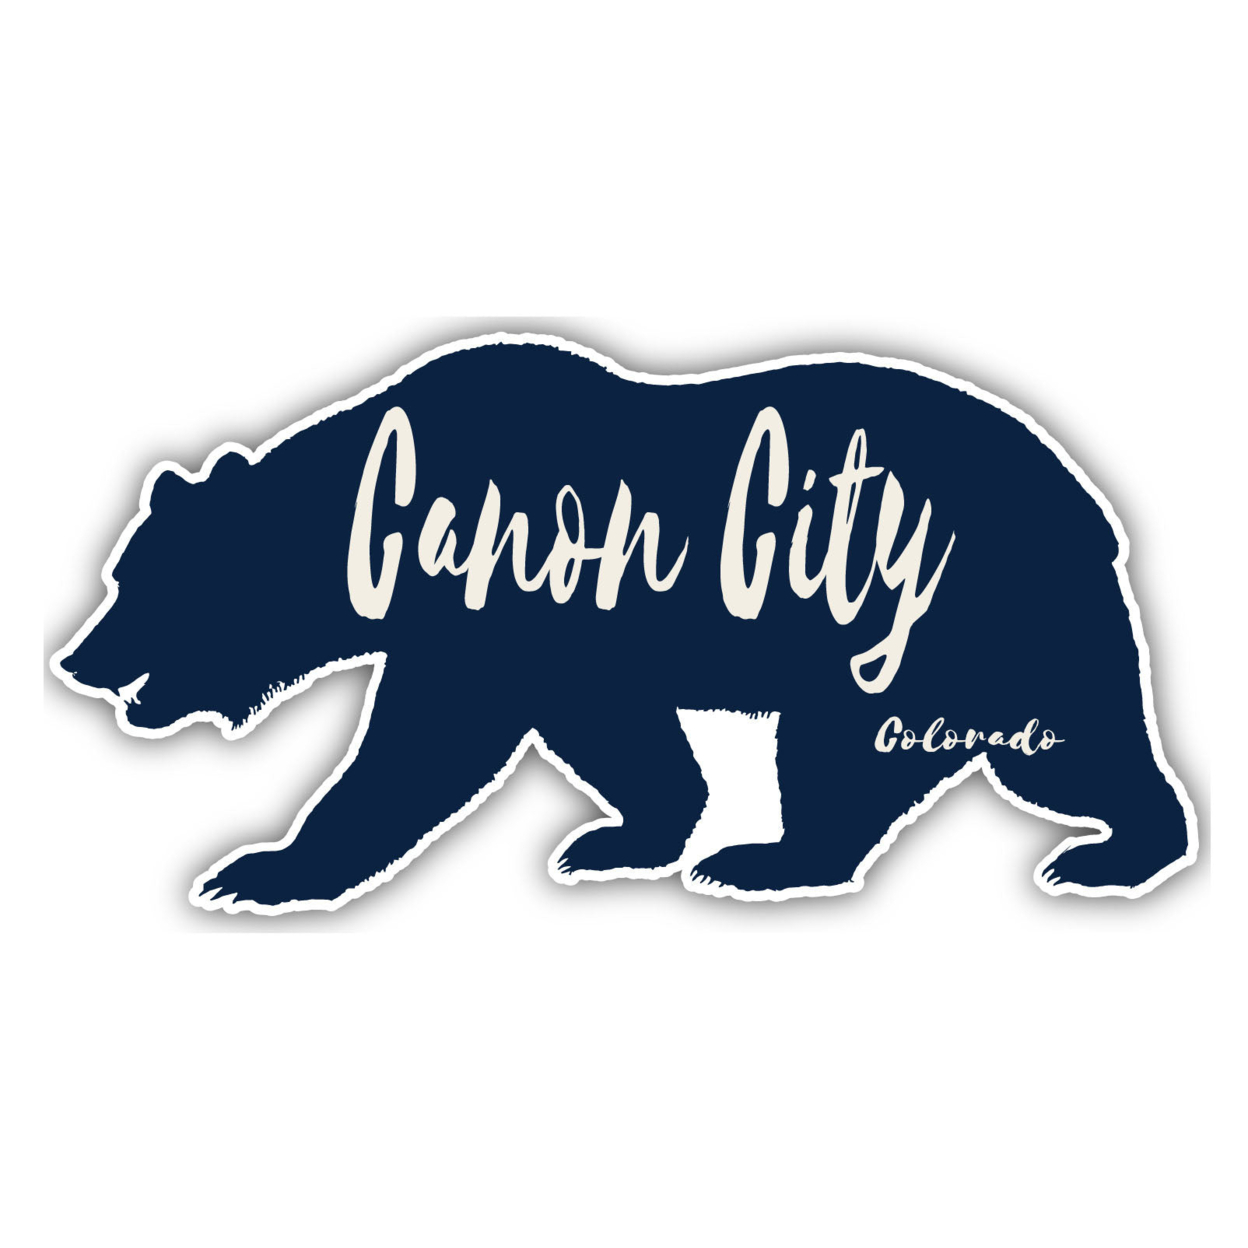 Canon City Colorado Souvenir Decorative Stickers (Choose Theme And Size) - Single Unit, 8-Inch, Bear